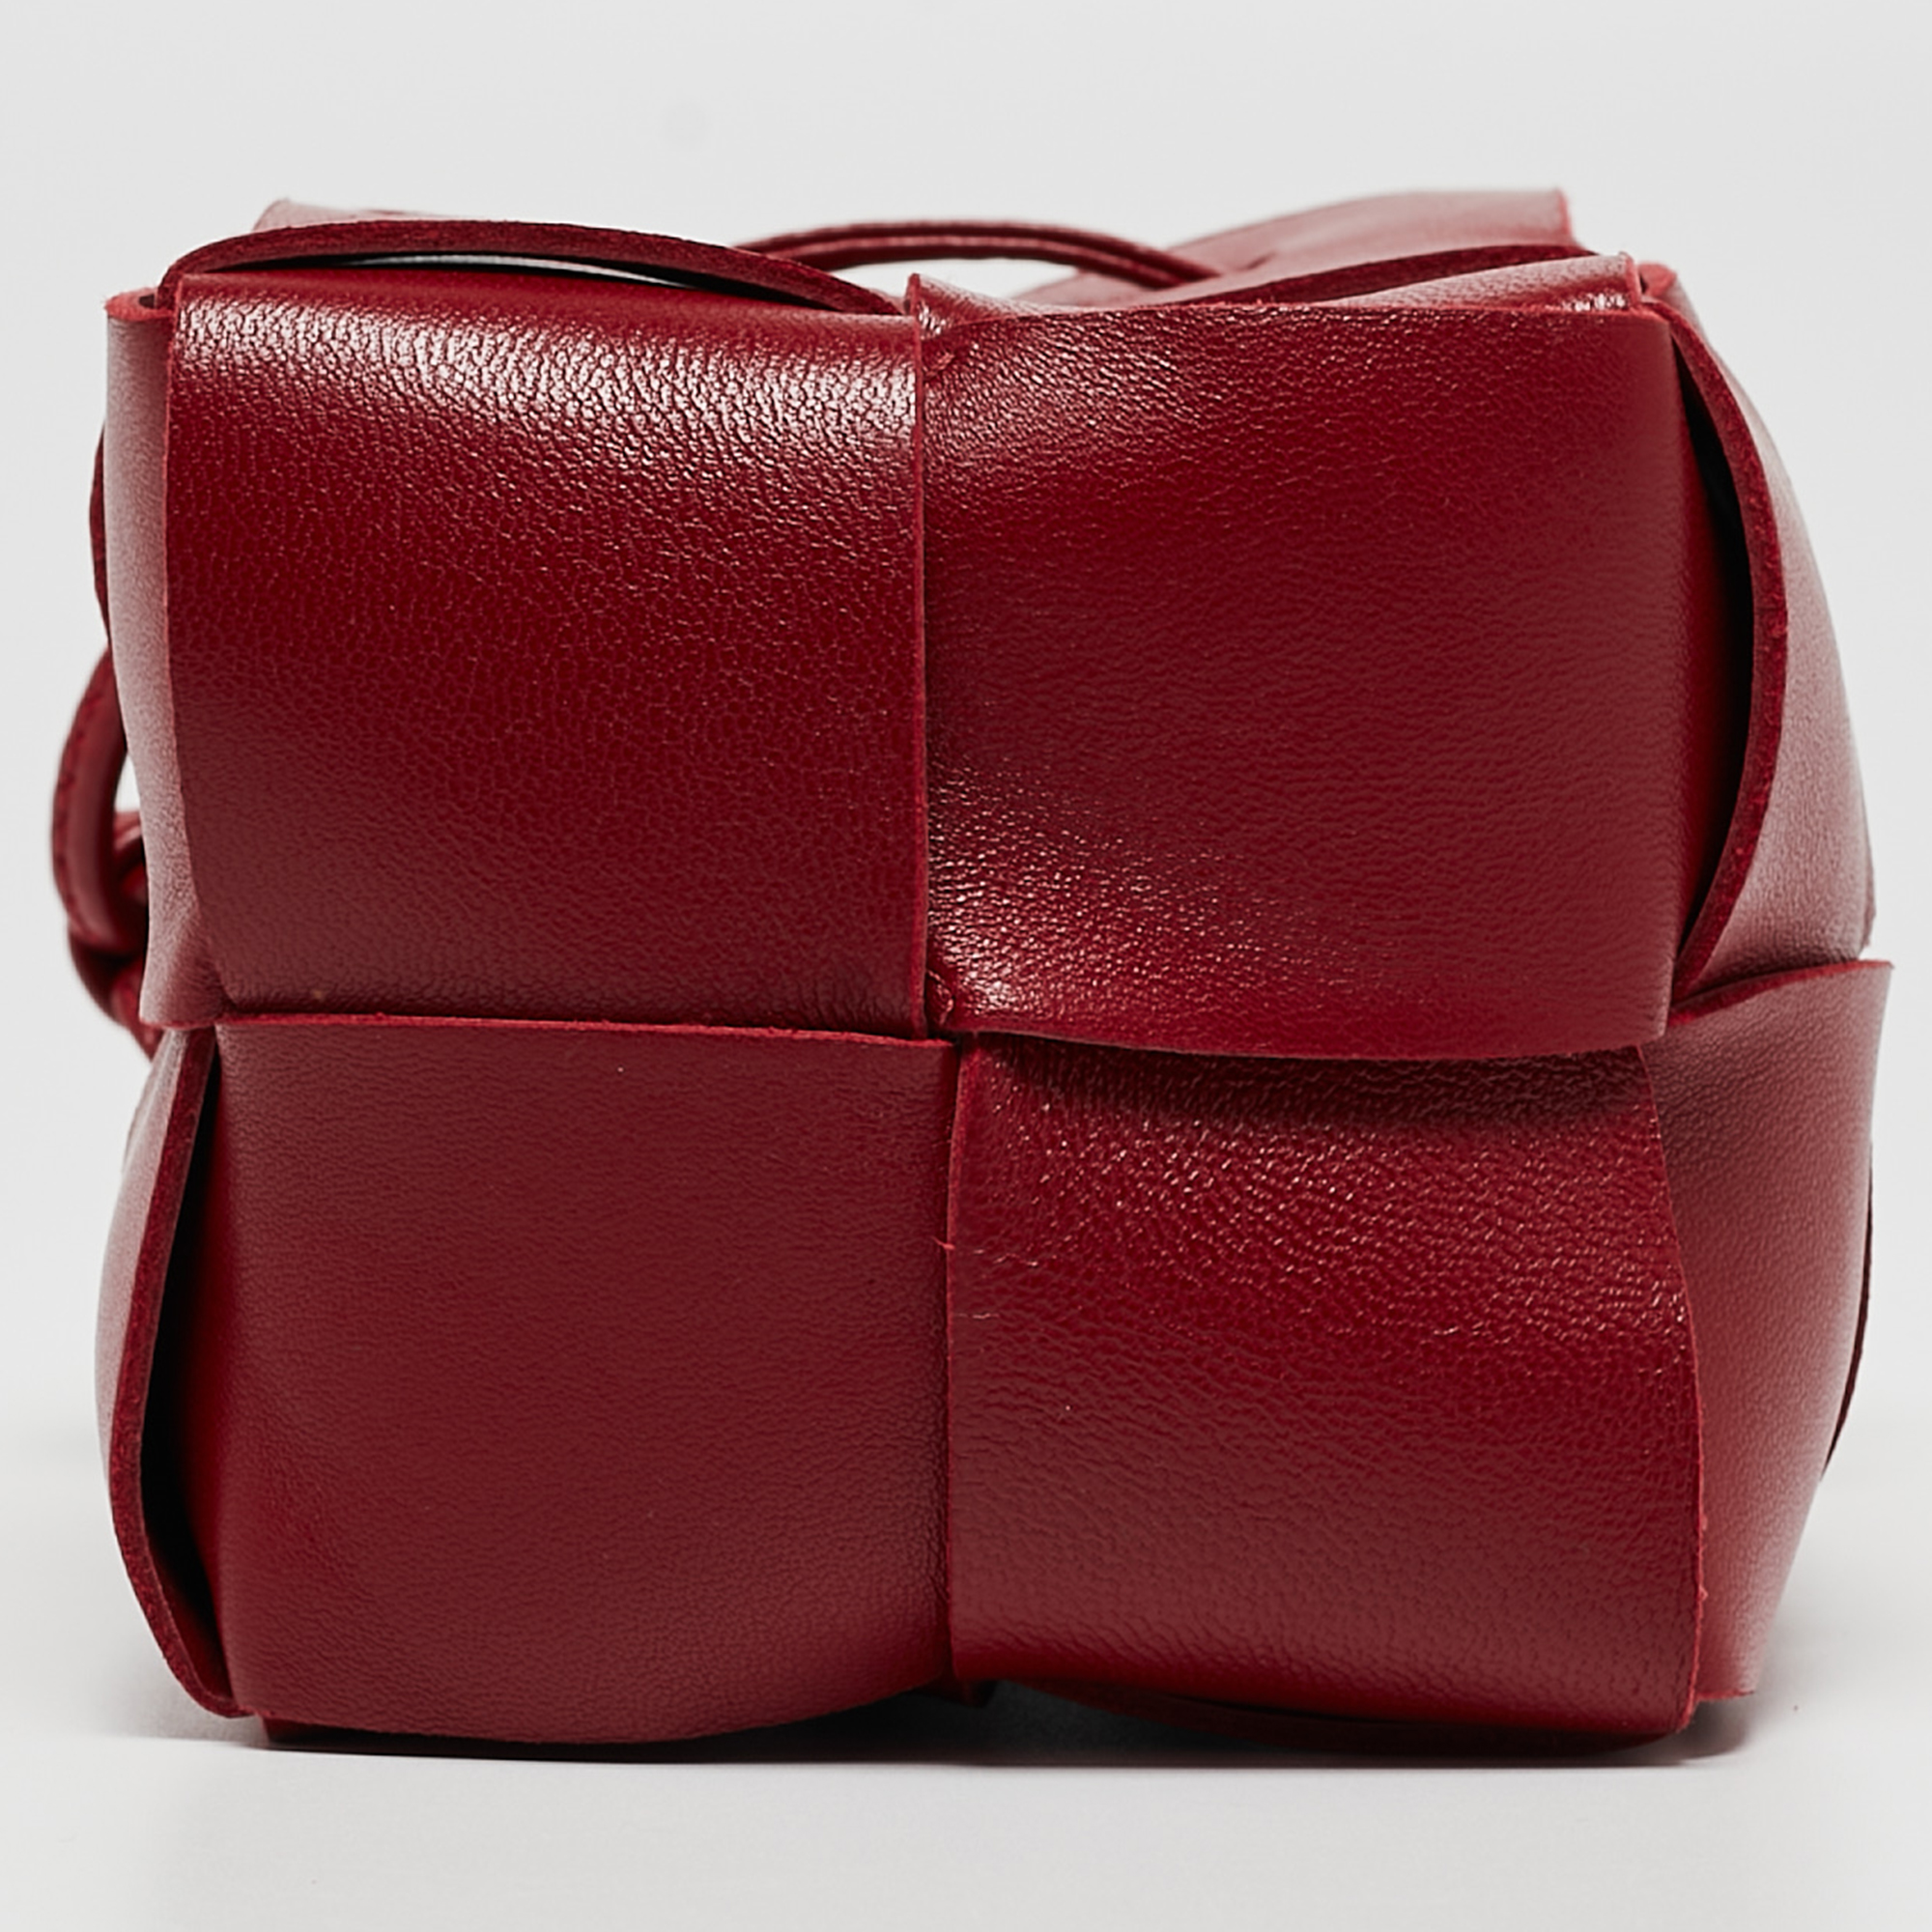 Bottega Veneta Red Intrecciato Leather Mini Cassette Bucket Bag